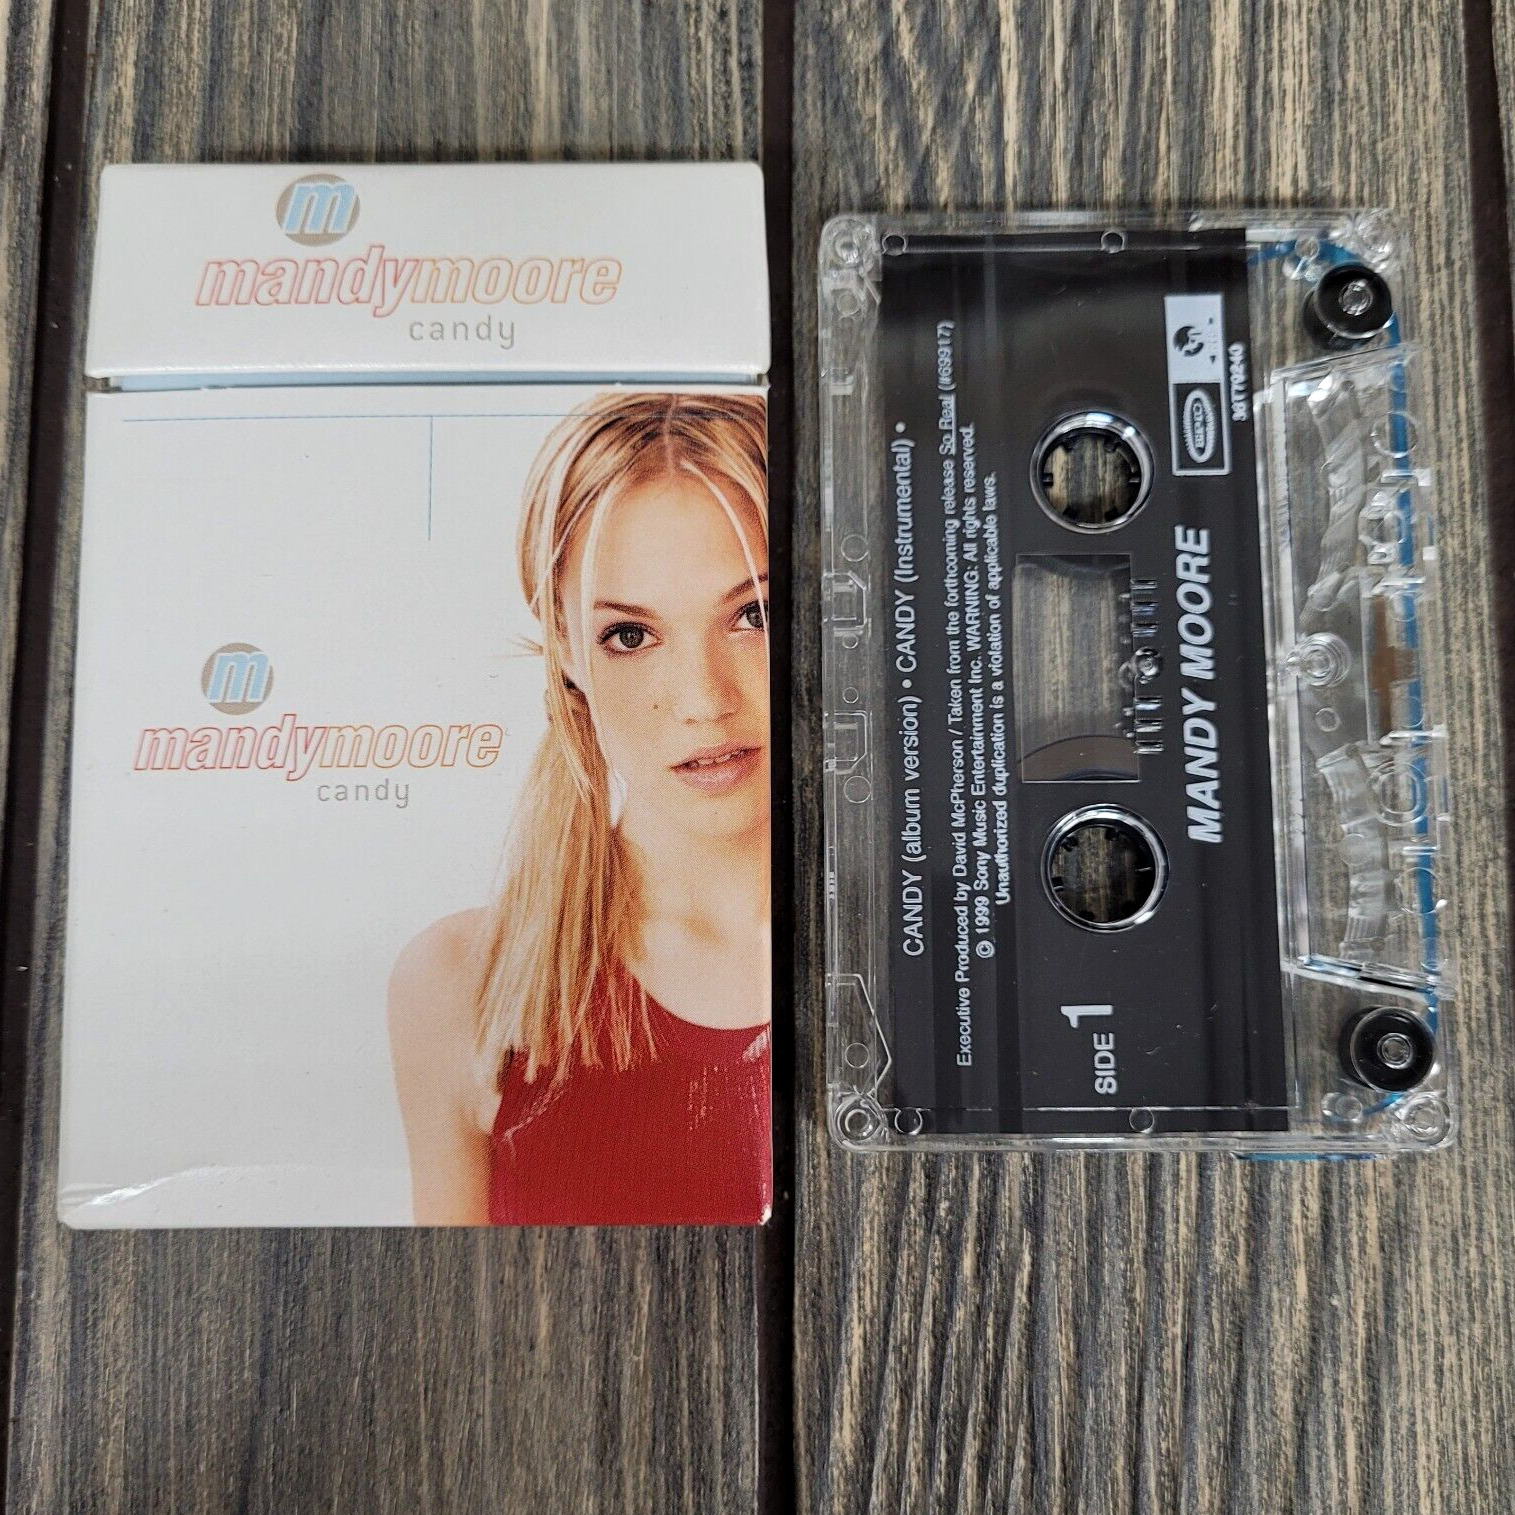 Mandy Moore: Candy (Cassette Debut Single, 1999) w/Flip Top Case & Insert EUC